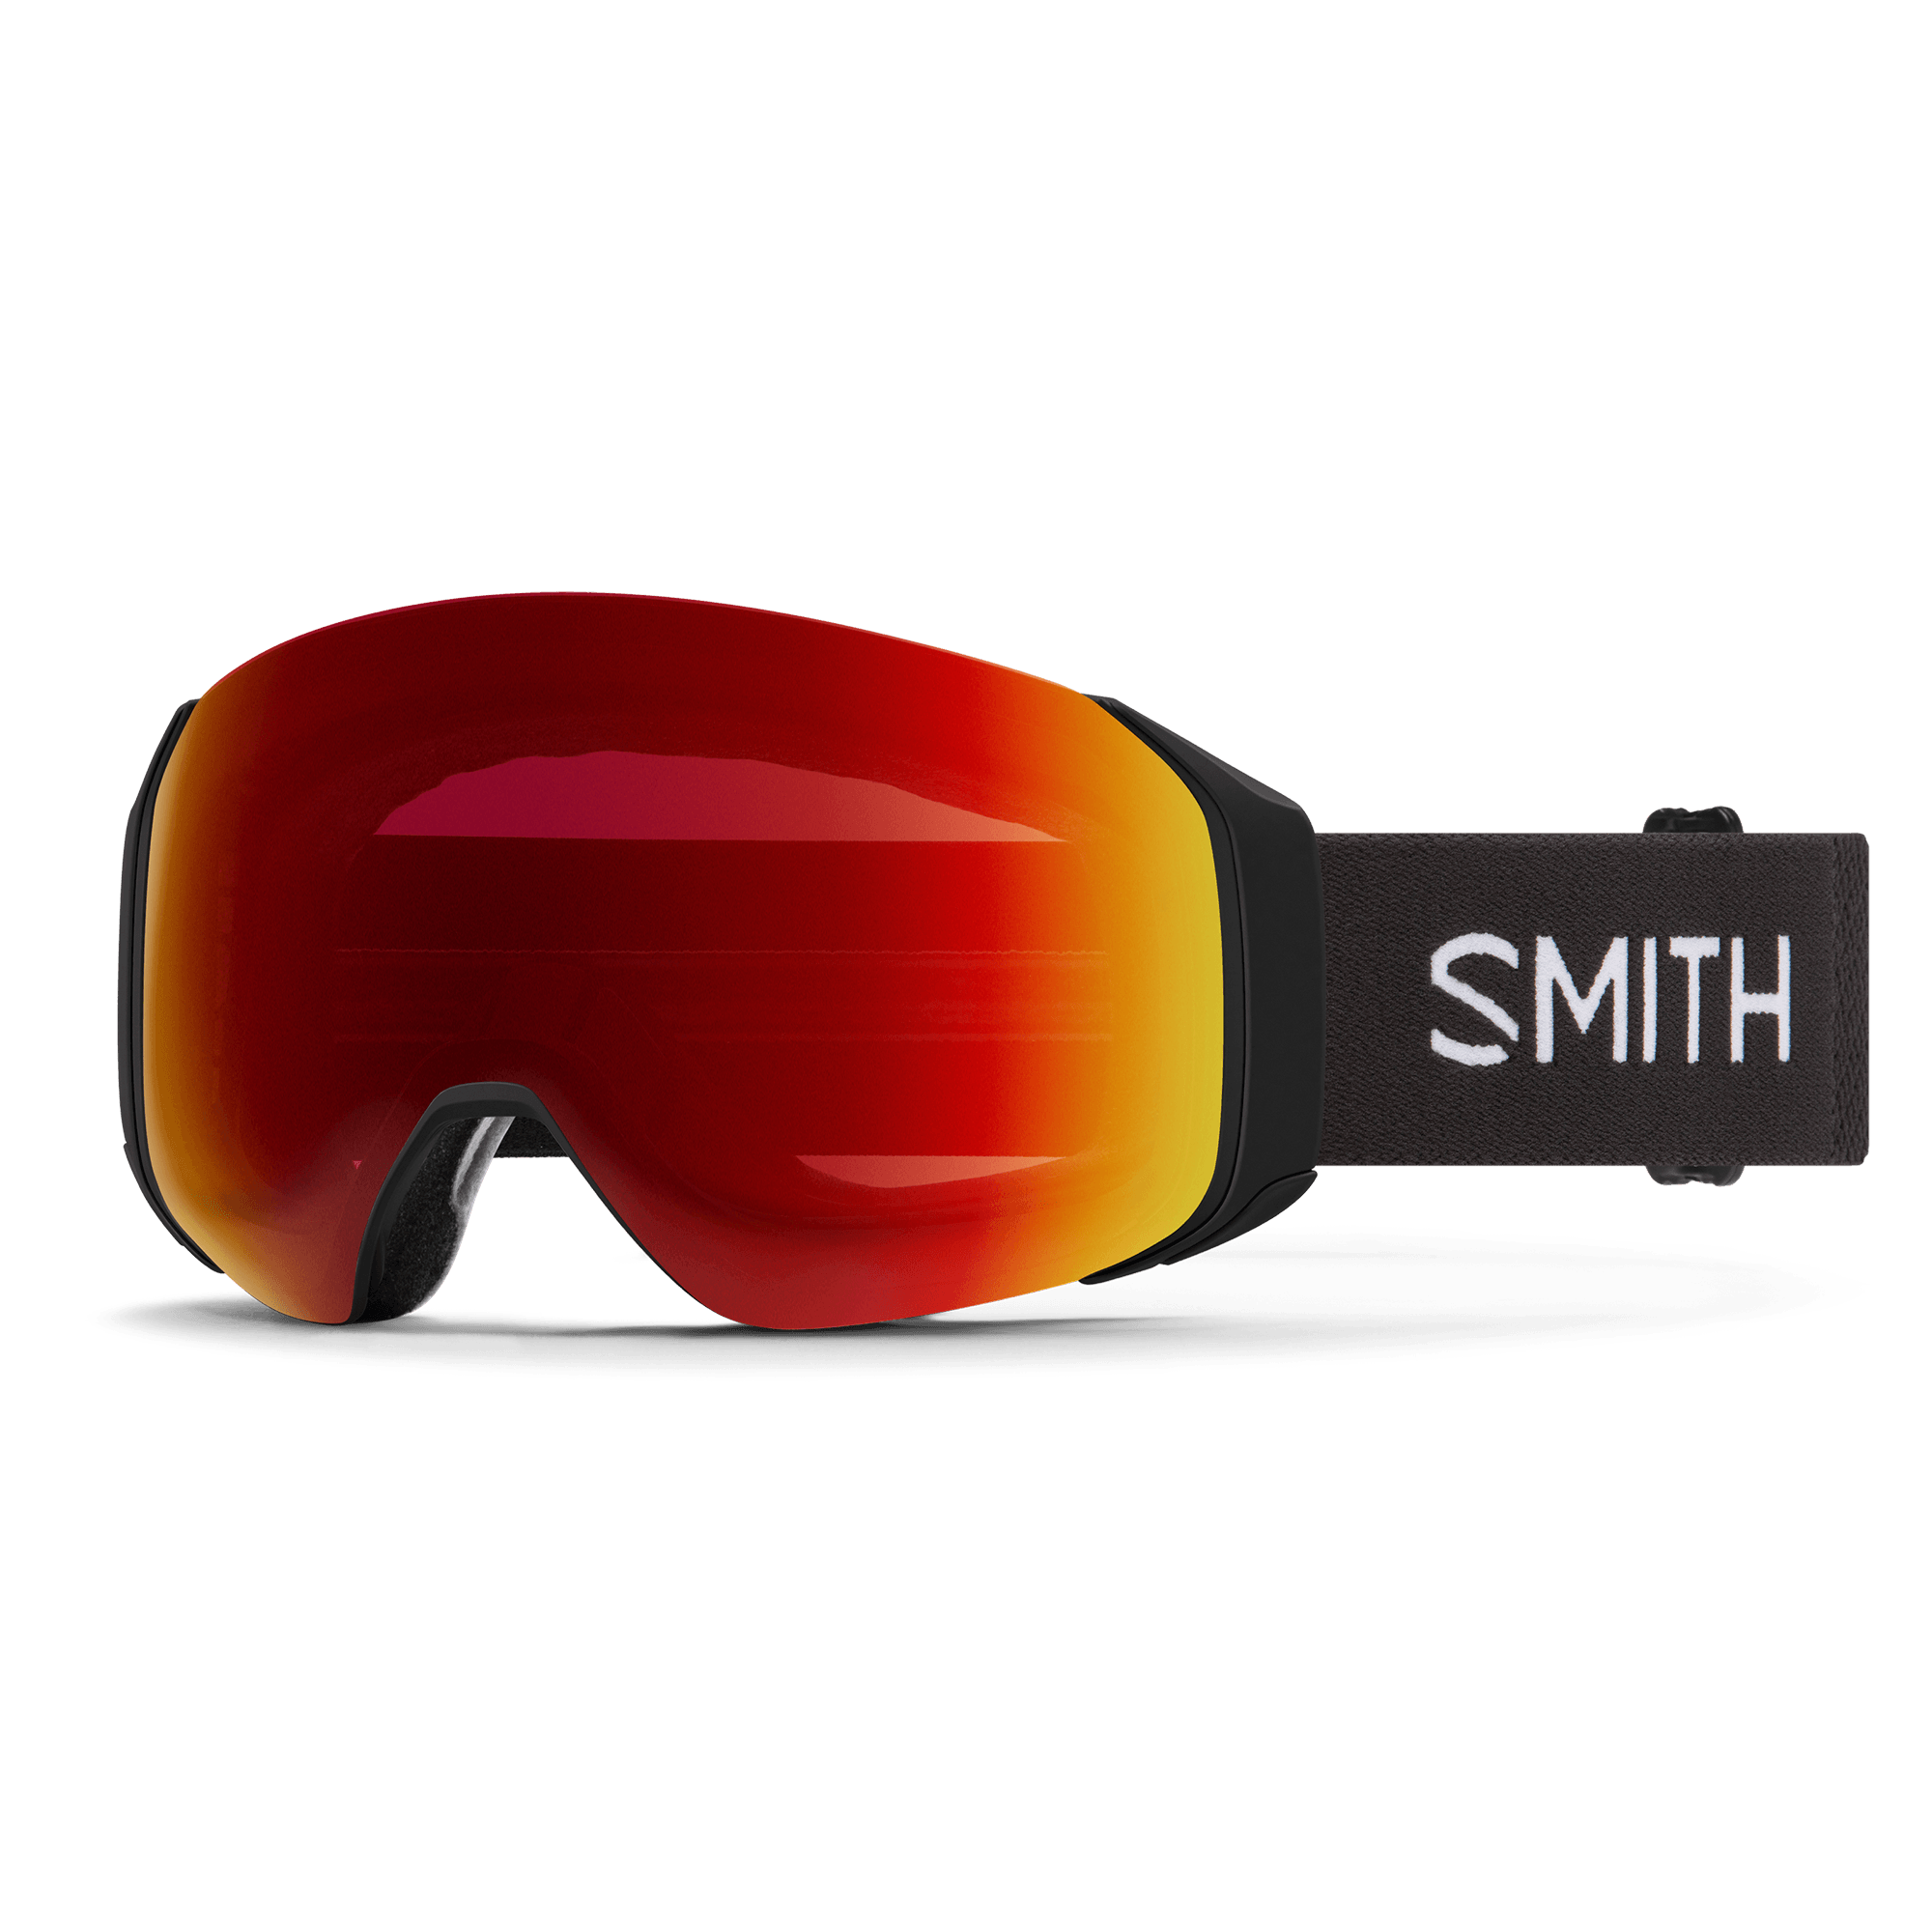 SMITH 4D Mag S Black - ChromaPop Sun Red Mirror + ChromaPop Storm Yellow Flash Snow Goggle Snow Goggles Smith 